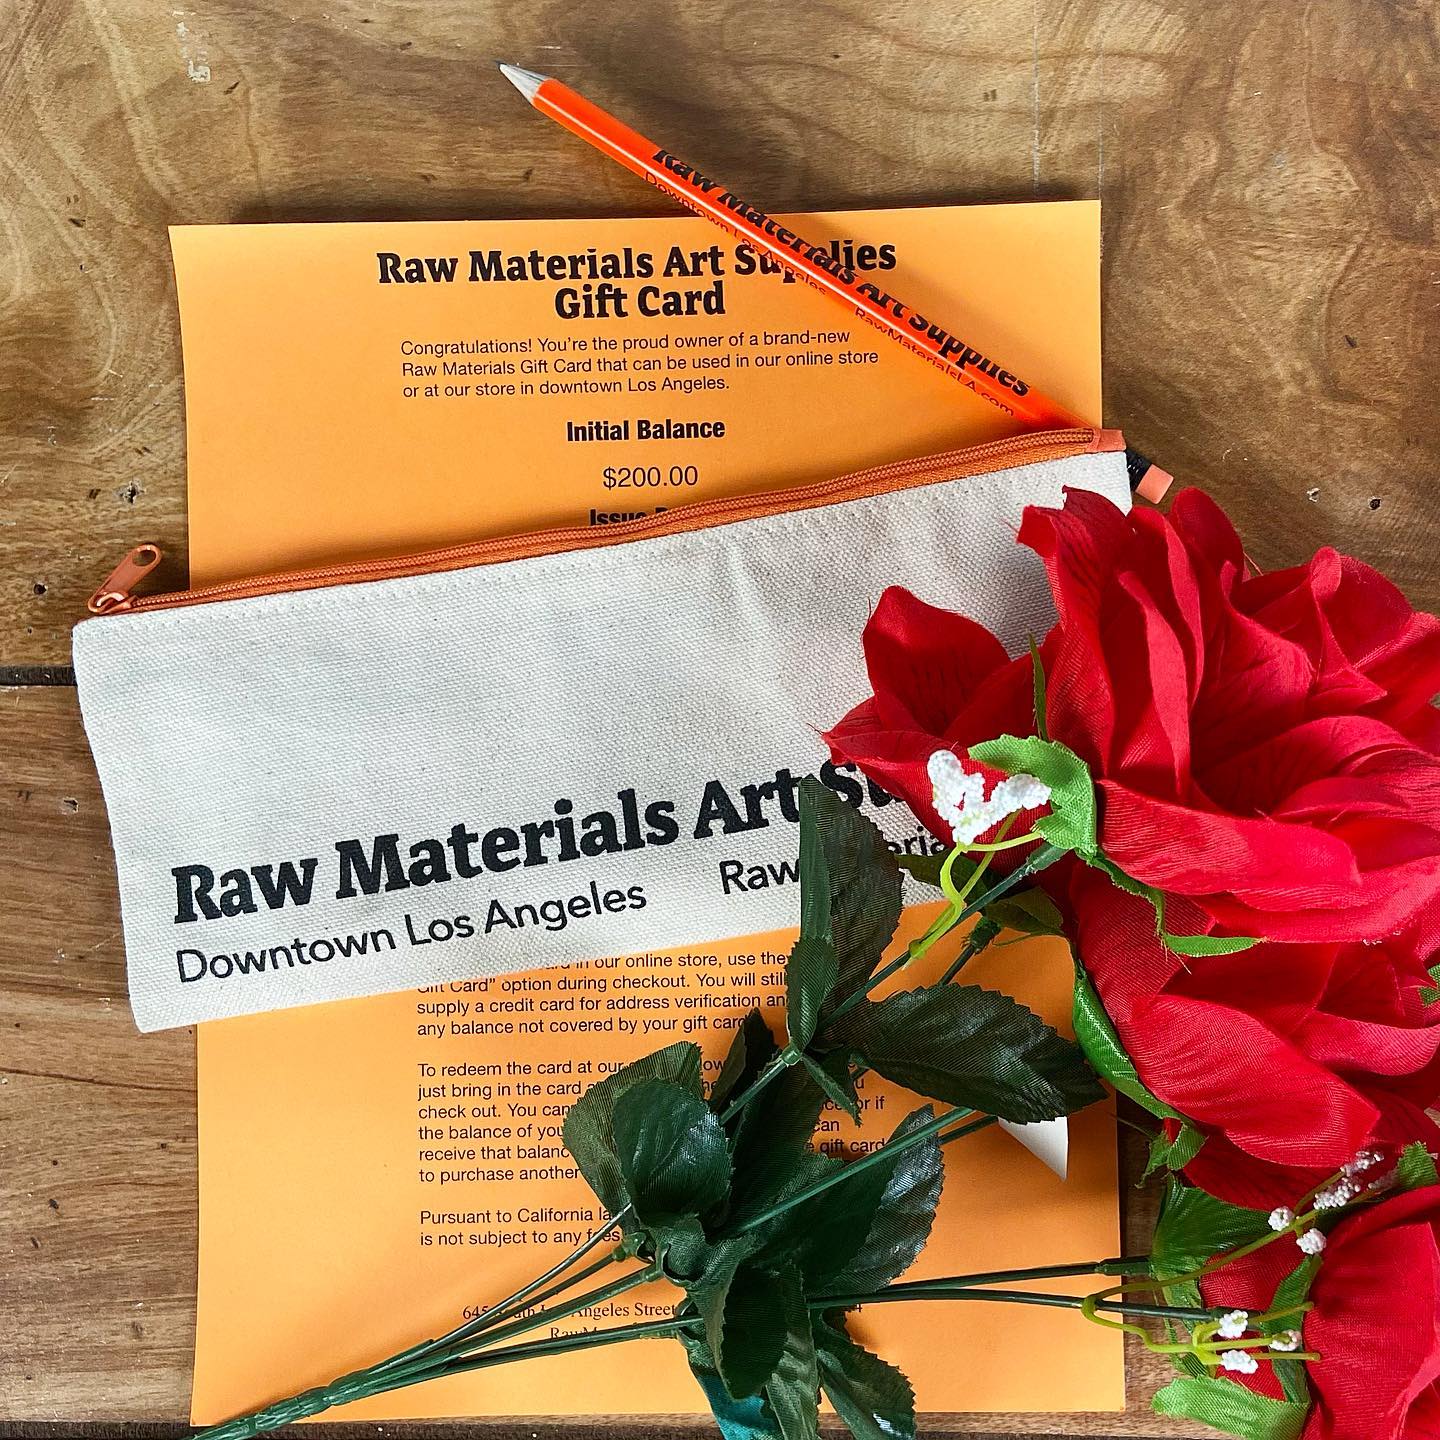 8 oz. Gloss Waterborne Acrylic Varnish @ Raw Materials Art Supplies